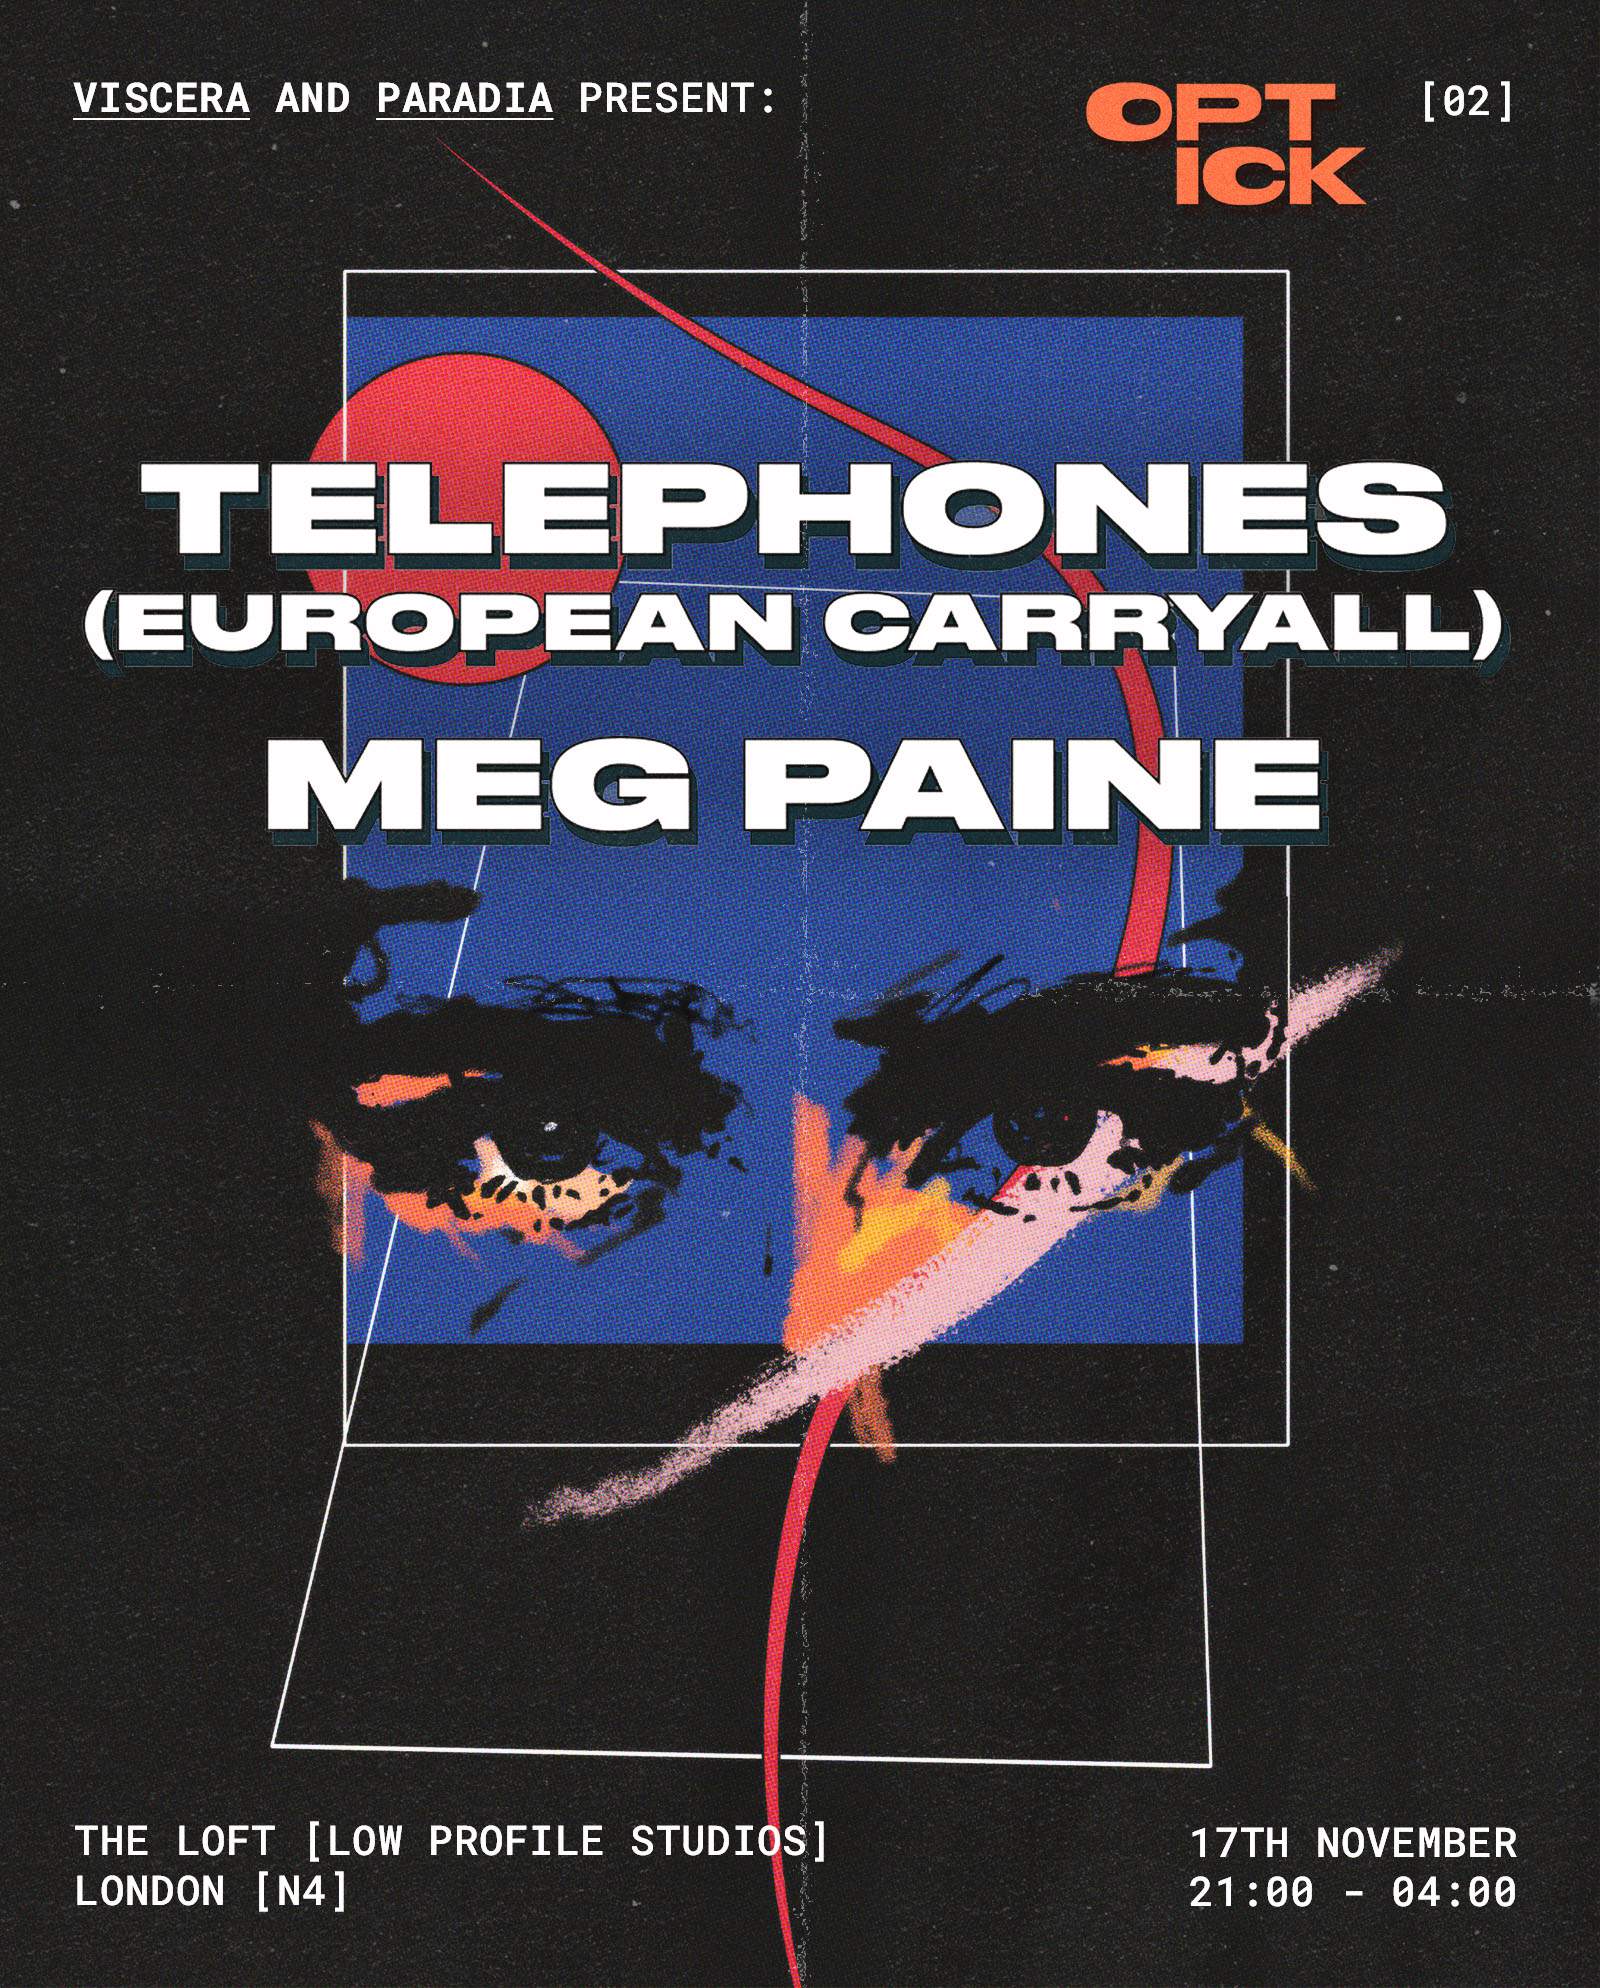 Viscera x Paradia present: Optick with Telephones & Meg Paine - フライヤー裏